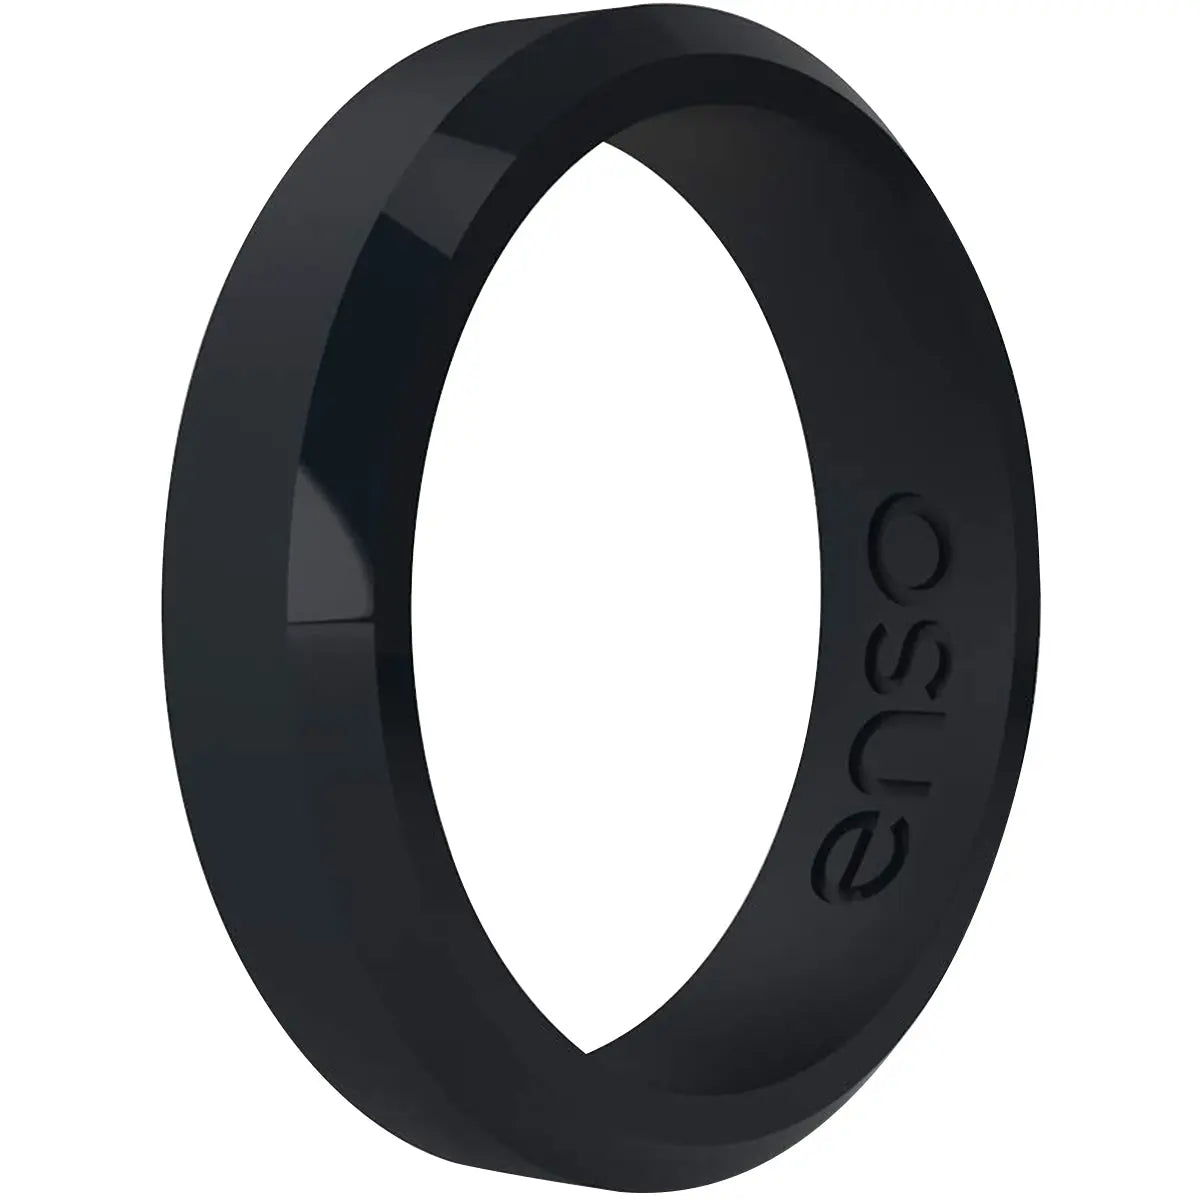 Enso Rings Thin Bevel Series Silicone Ring Enso Rings